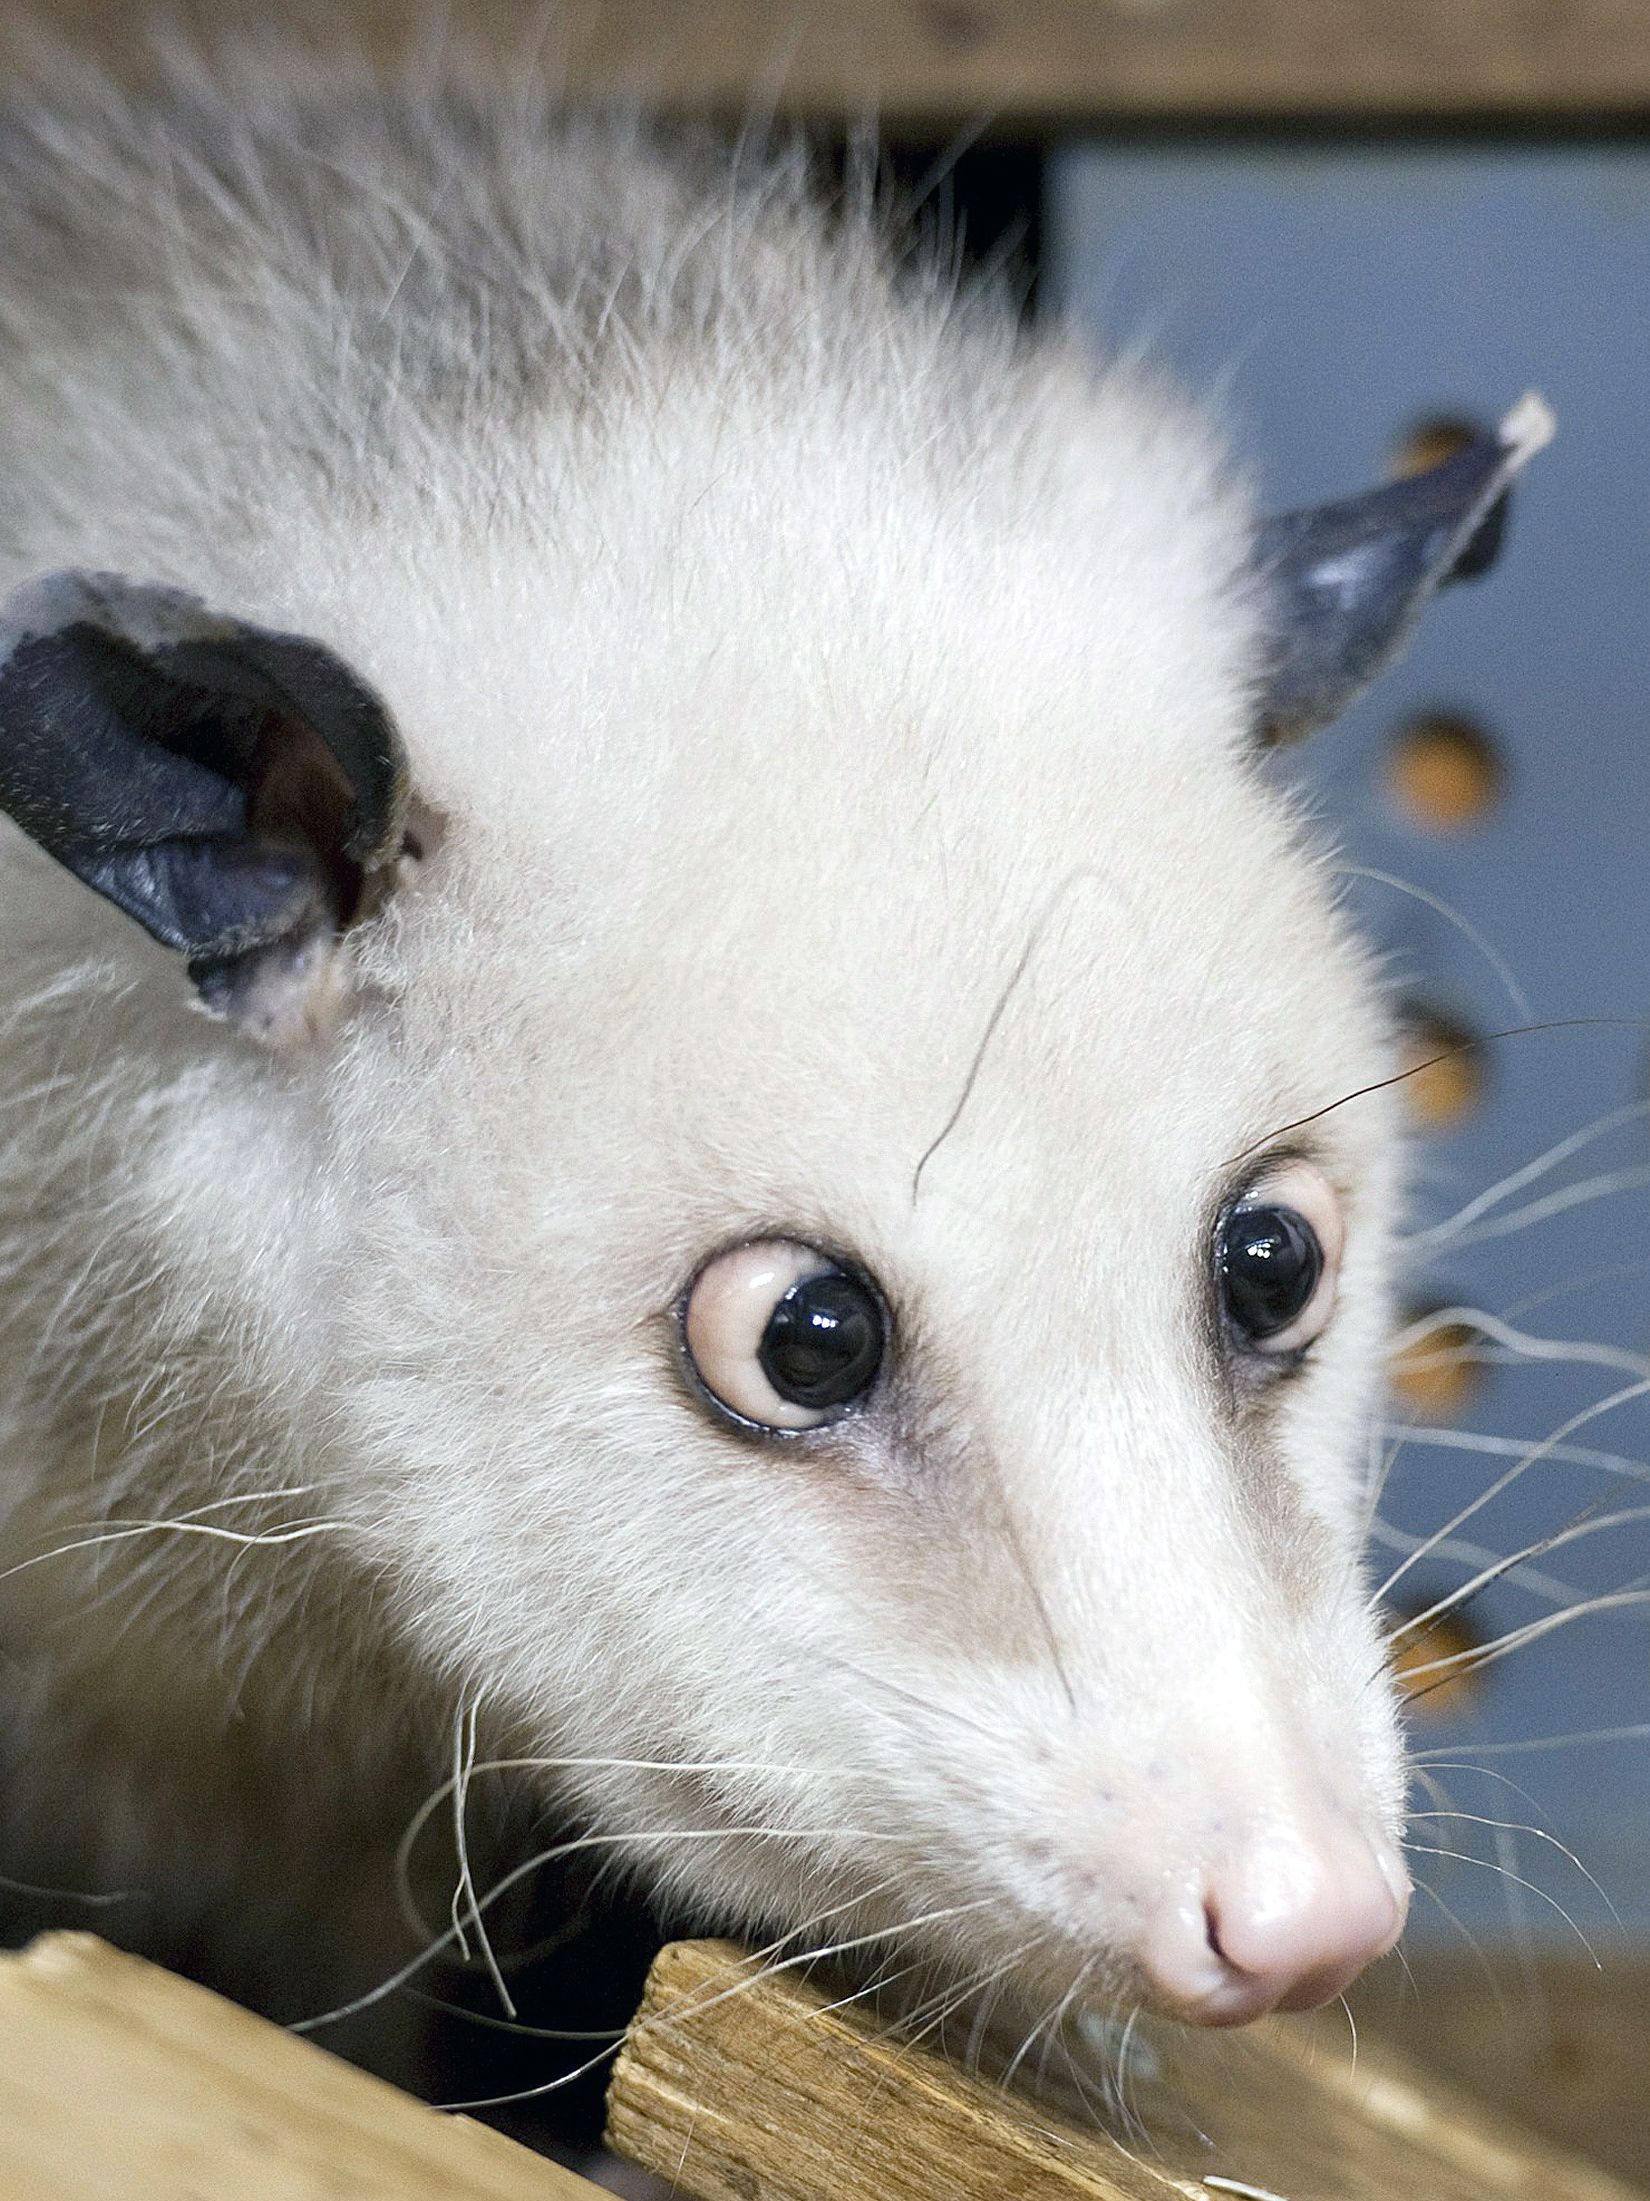 Germany's famous cross-eyed opossum Heidi dies | CNN